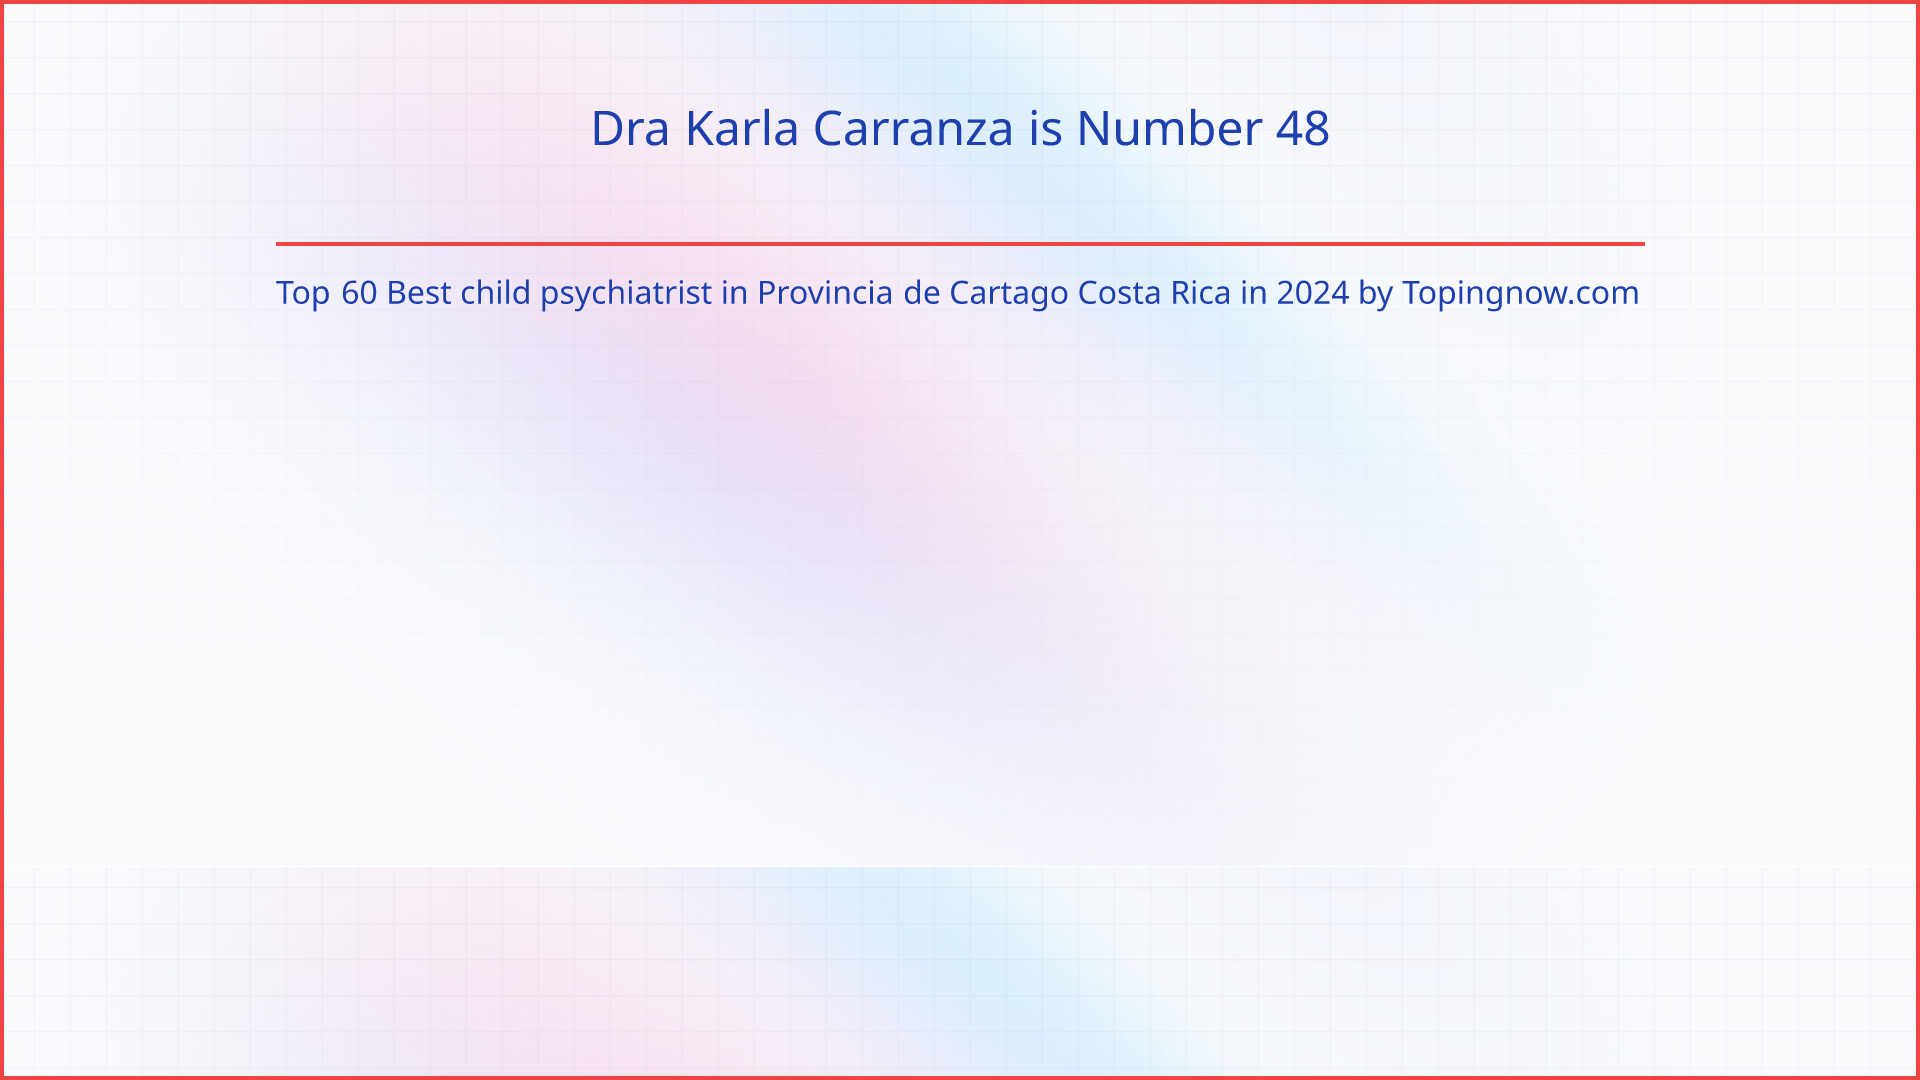 Dra Karla Carranza: Top 60 Best child psychiatrist in Provincia de Cartago Costa Rica in 2024